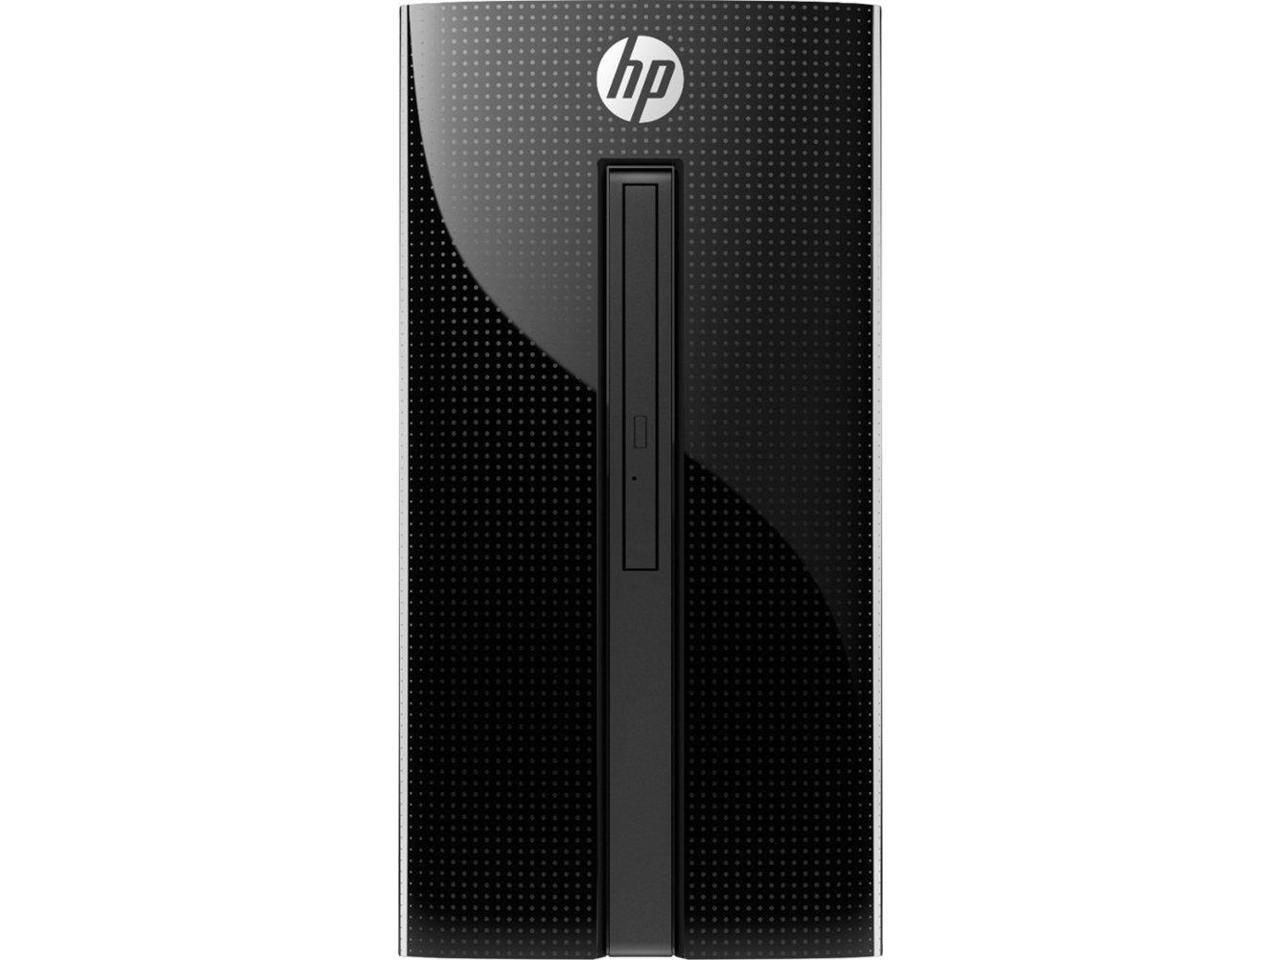 HP Flagship High-Performance Desktop| Intel Quad Core i7-7700T| 8GB DDR4 SDRAM |1T 7200 RPM HDD | DVD+/-RW| Bluetooth 4.2| WIFI| HDMI |Windows 10 | Includes Keyboard and Mouse